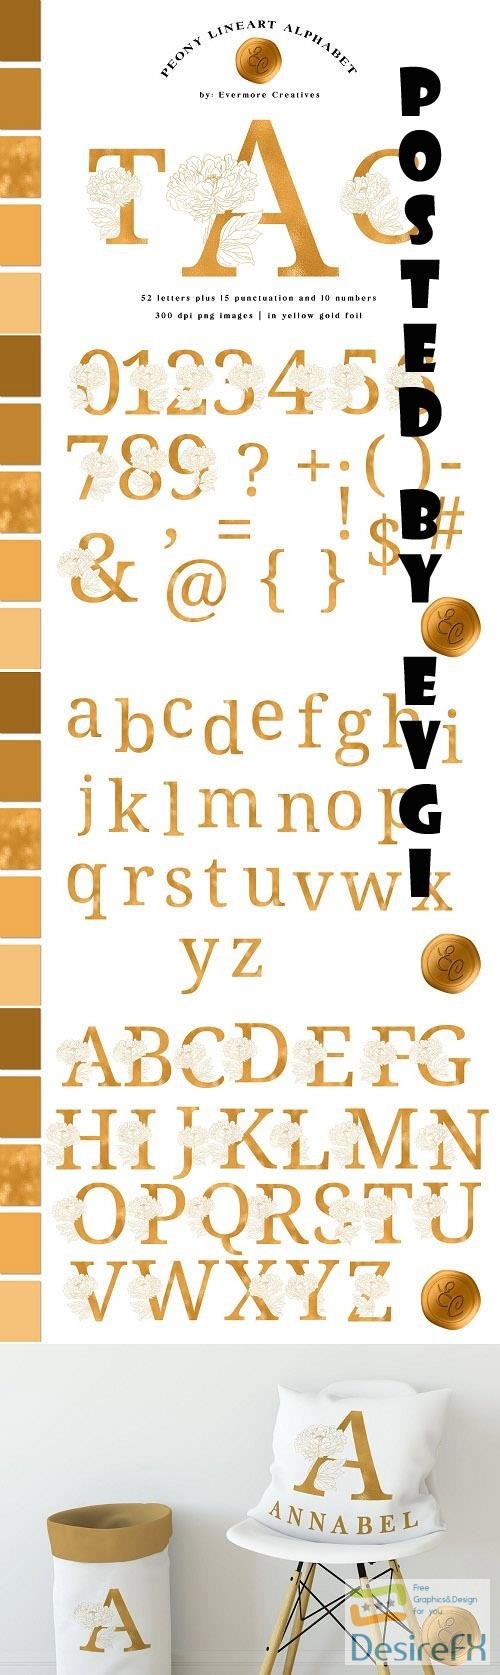 Line Art Peony Alphabet in Gold Foil - 6090219